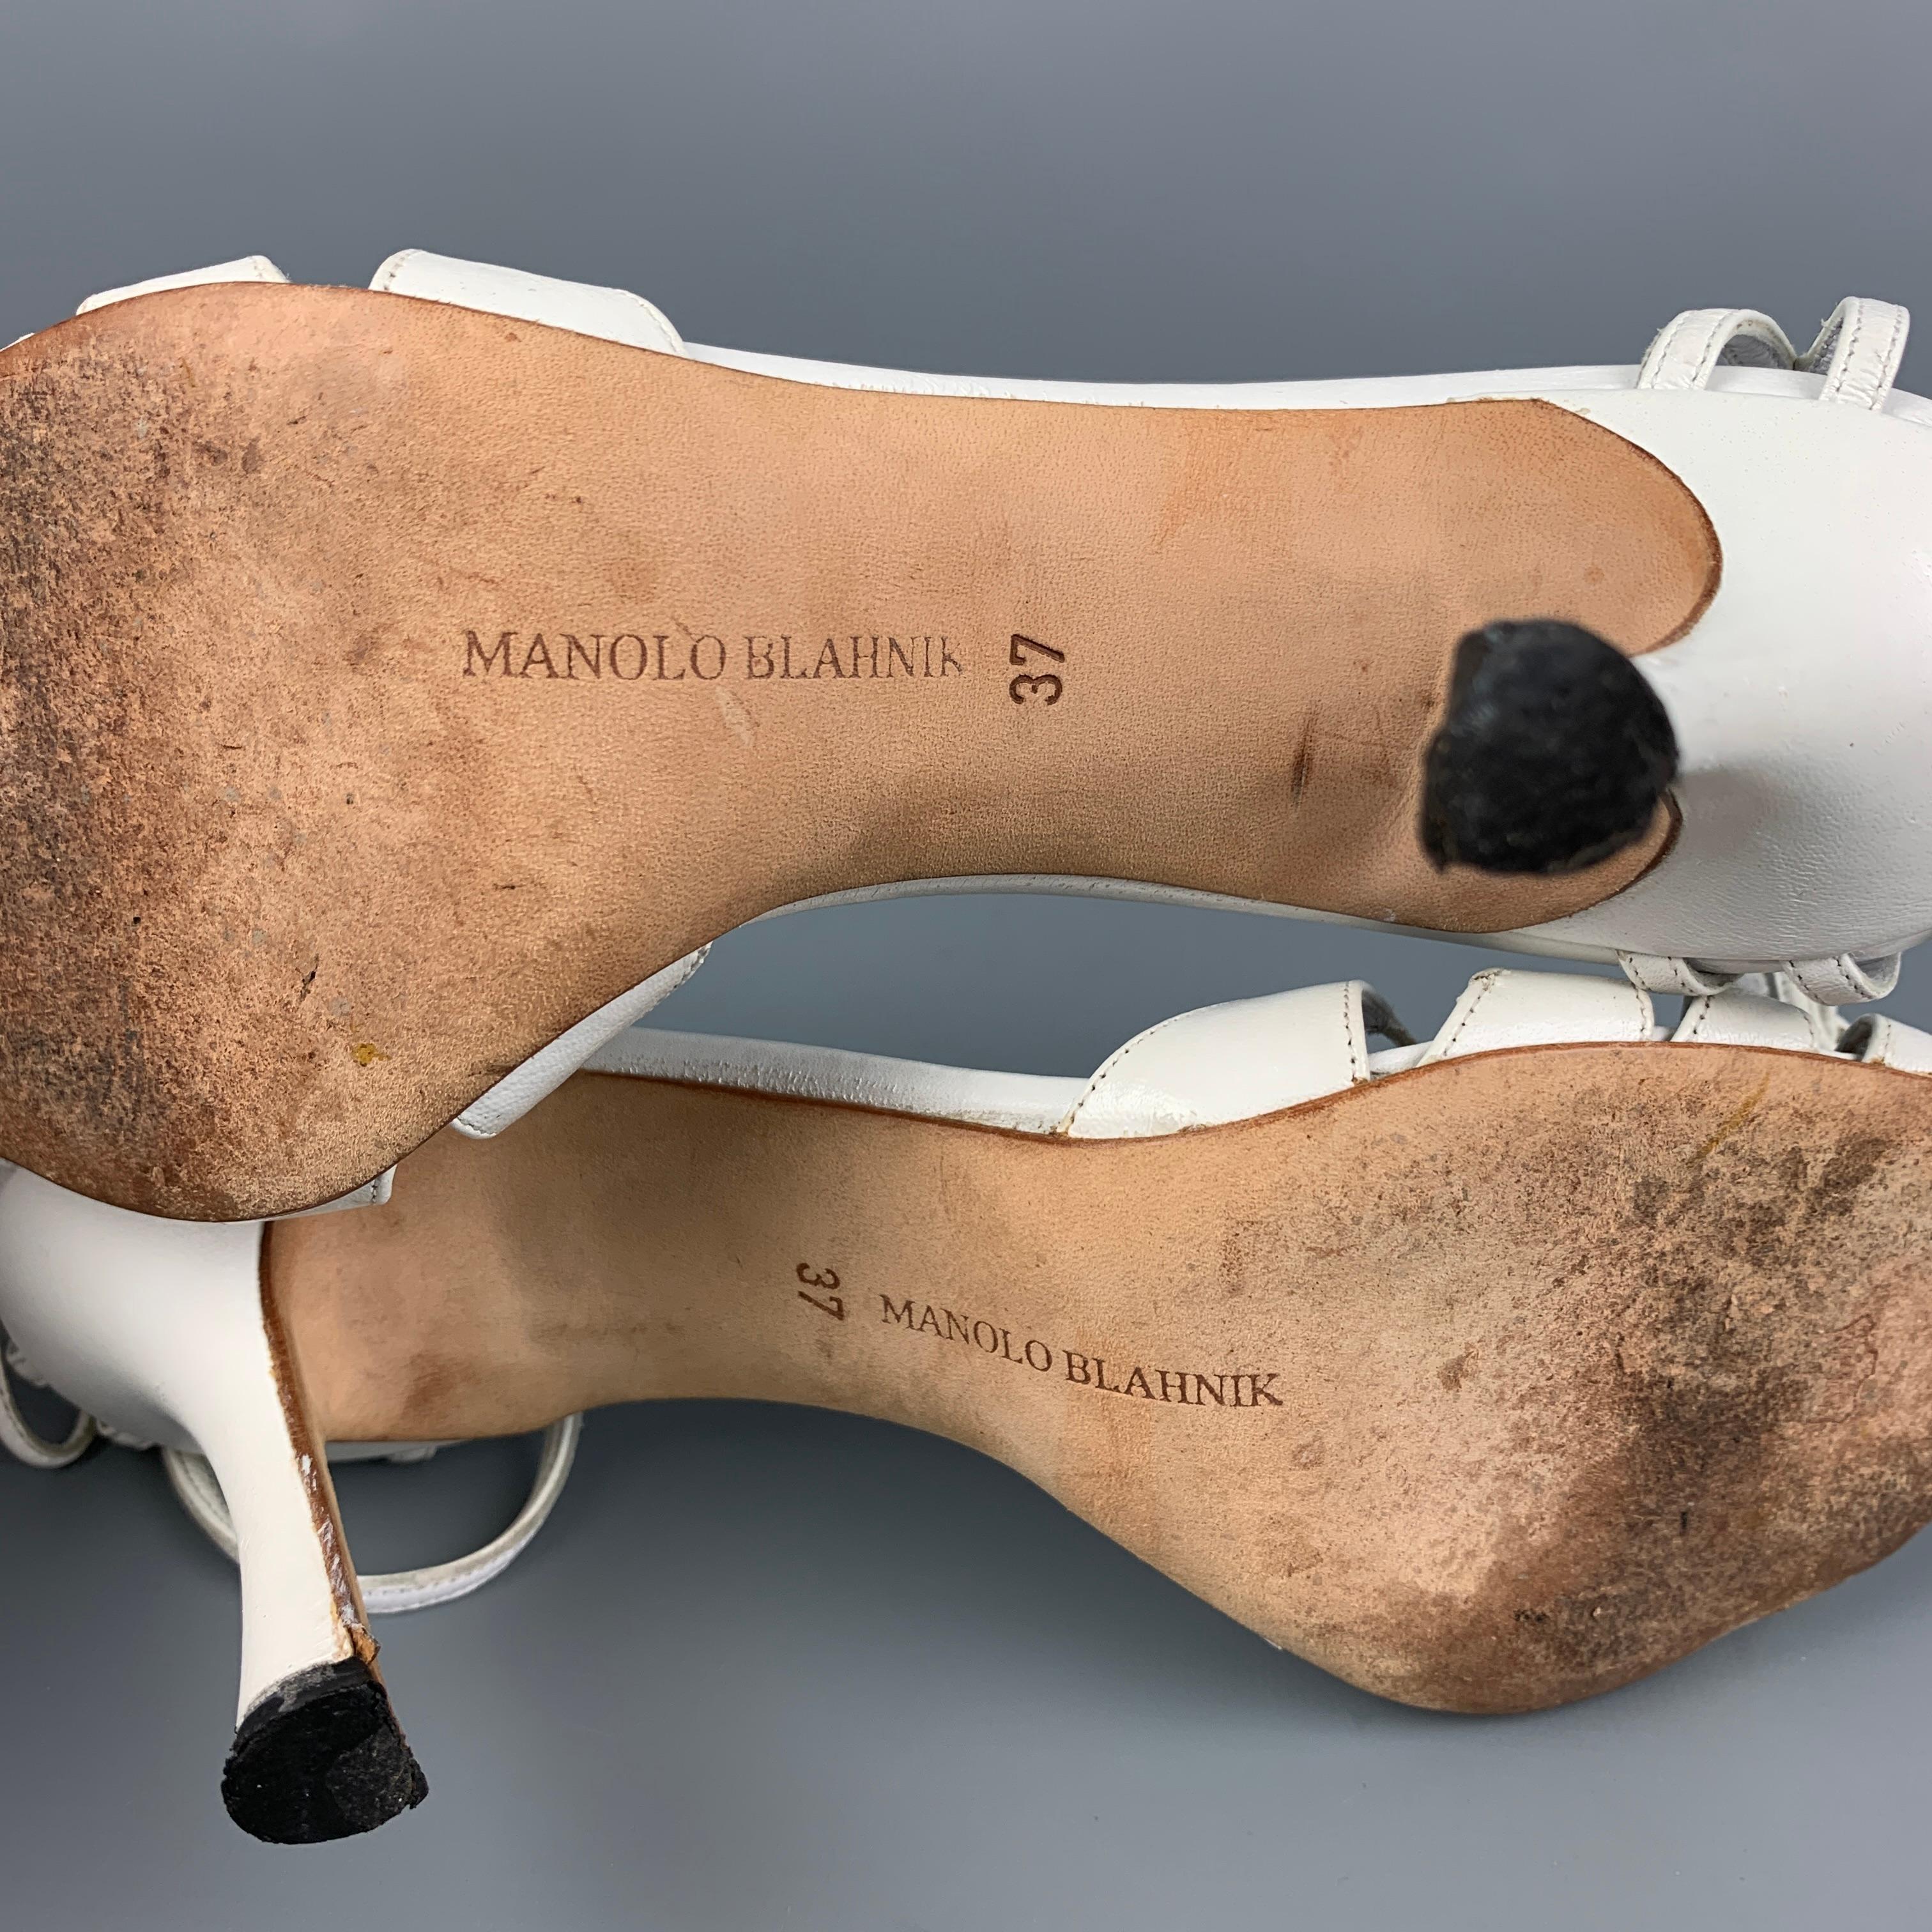 MANOLO BLAHNIK Size 7 White Leather Ankle Strap Sandals 2